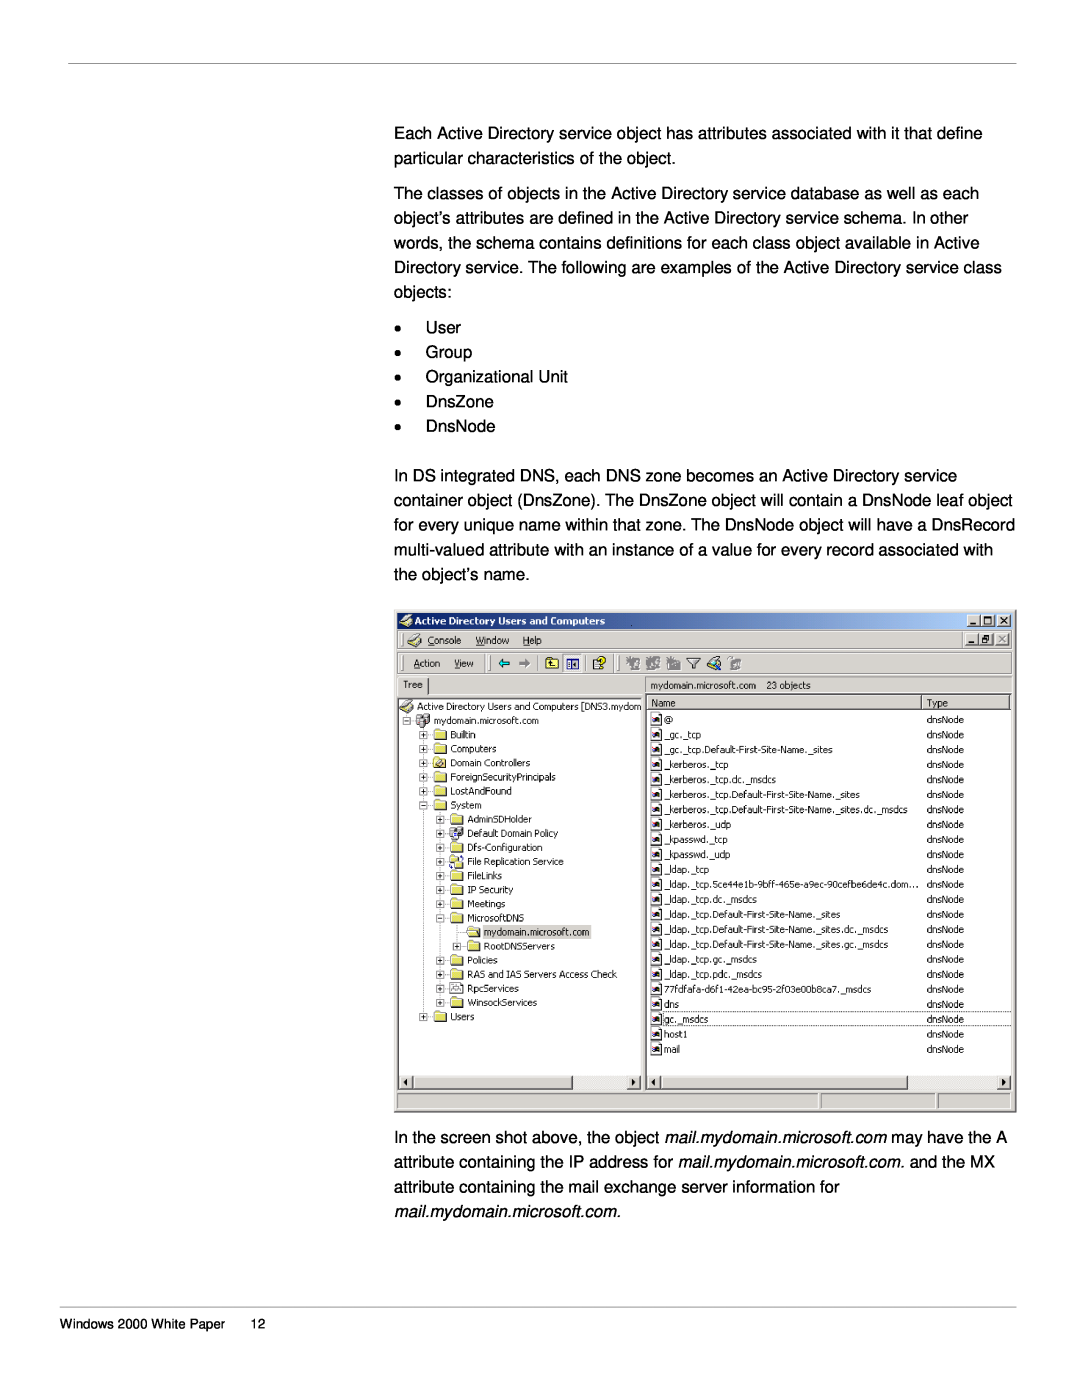 Microsoft windows 2000 DNS manual User Group Organizational Unit DnsZone DnsNode 